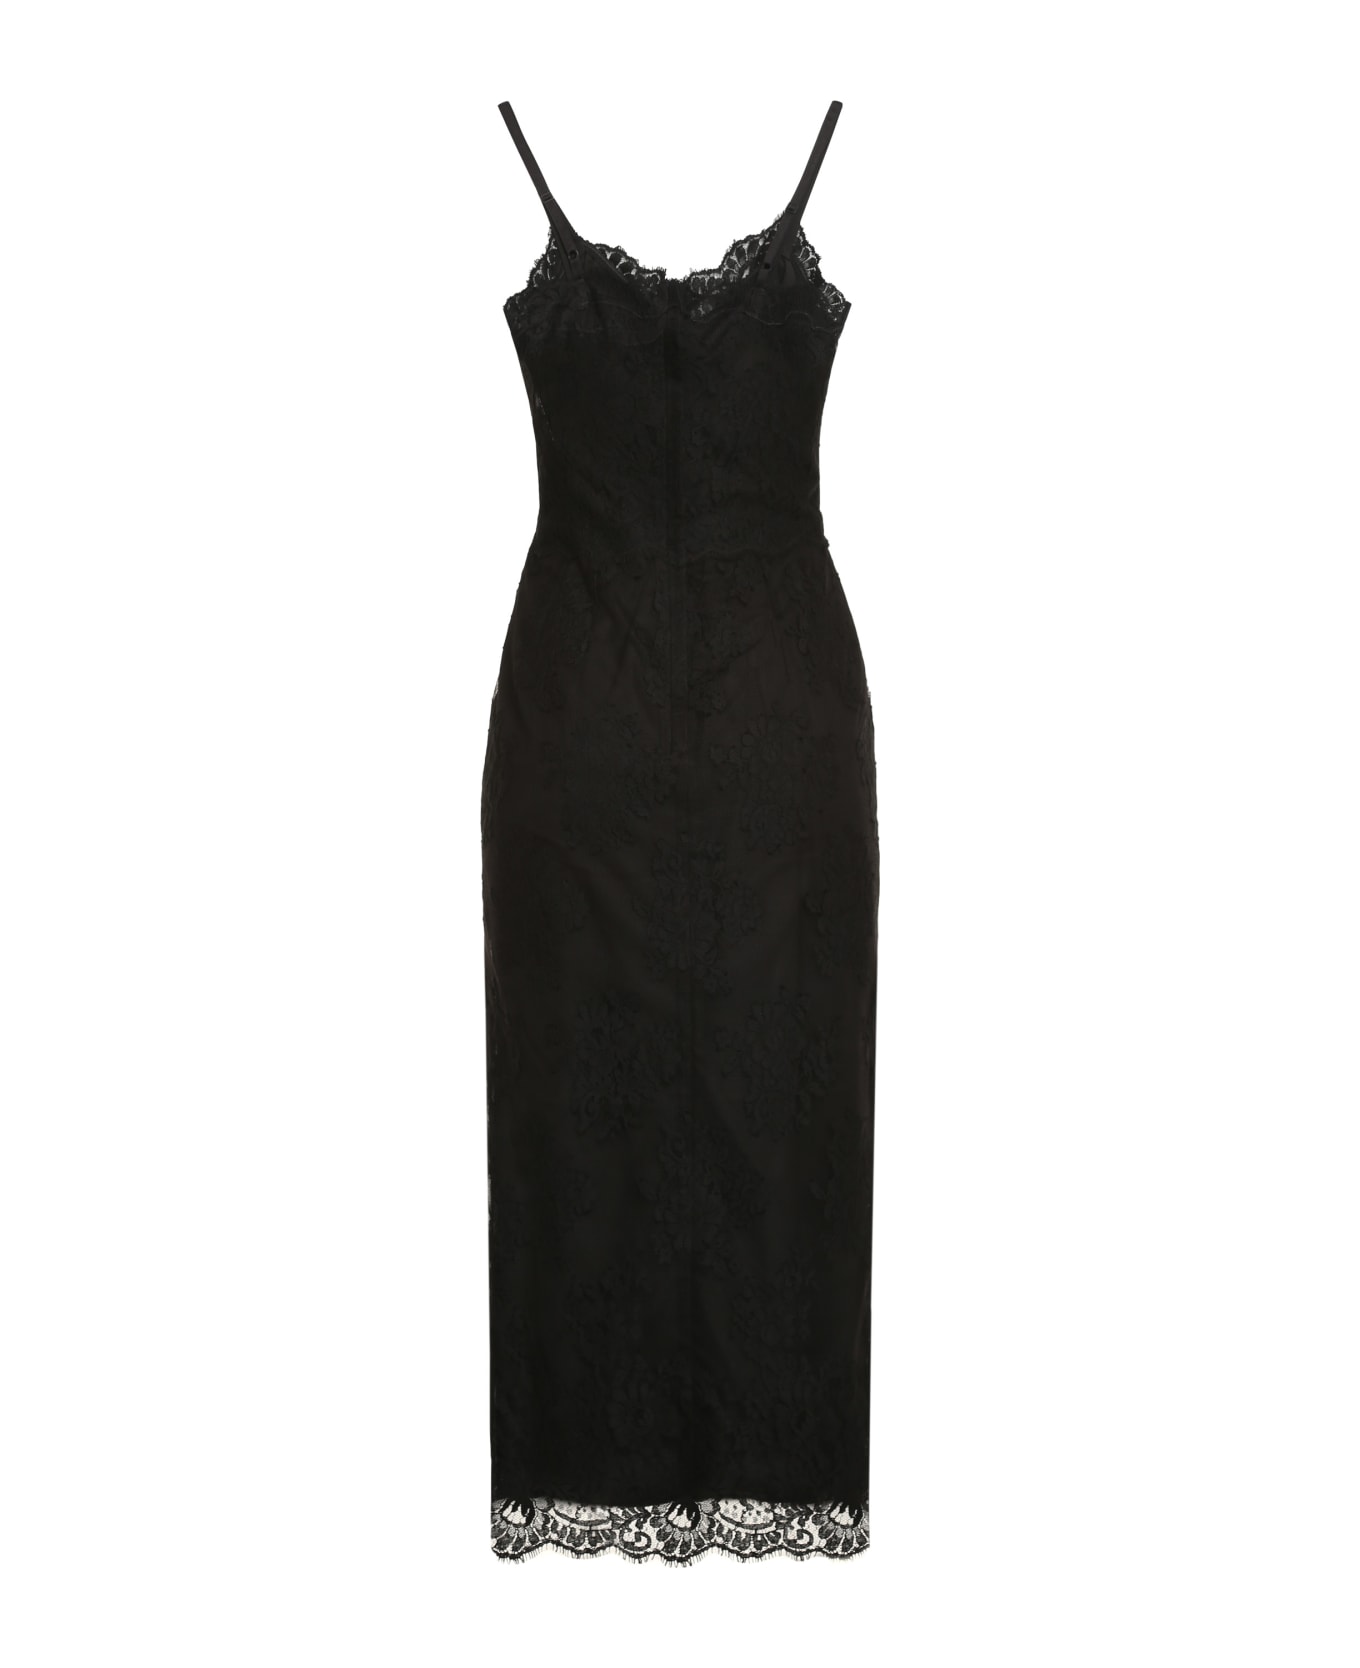 Dolce & Gabbana Lace Dress - black